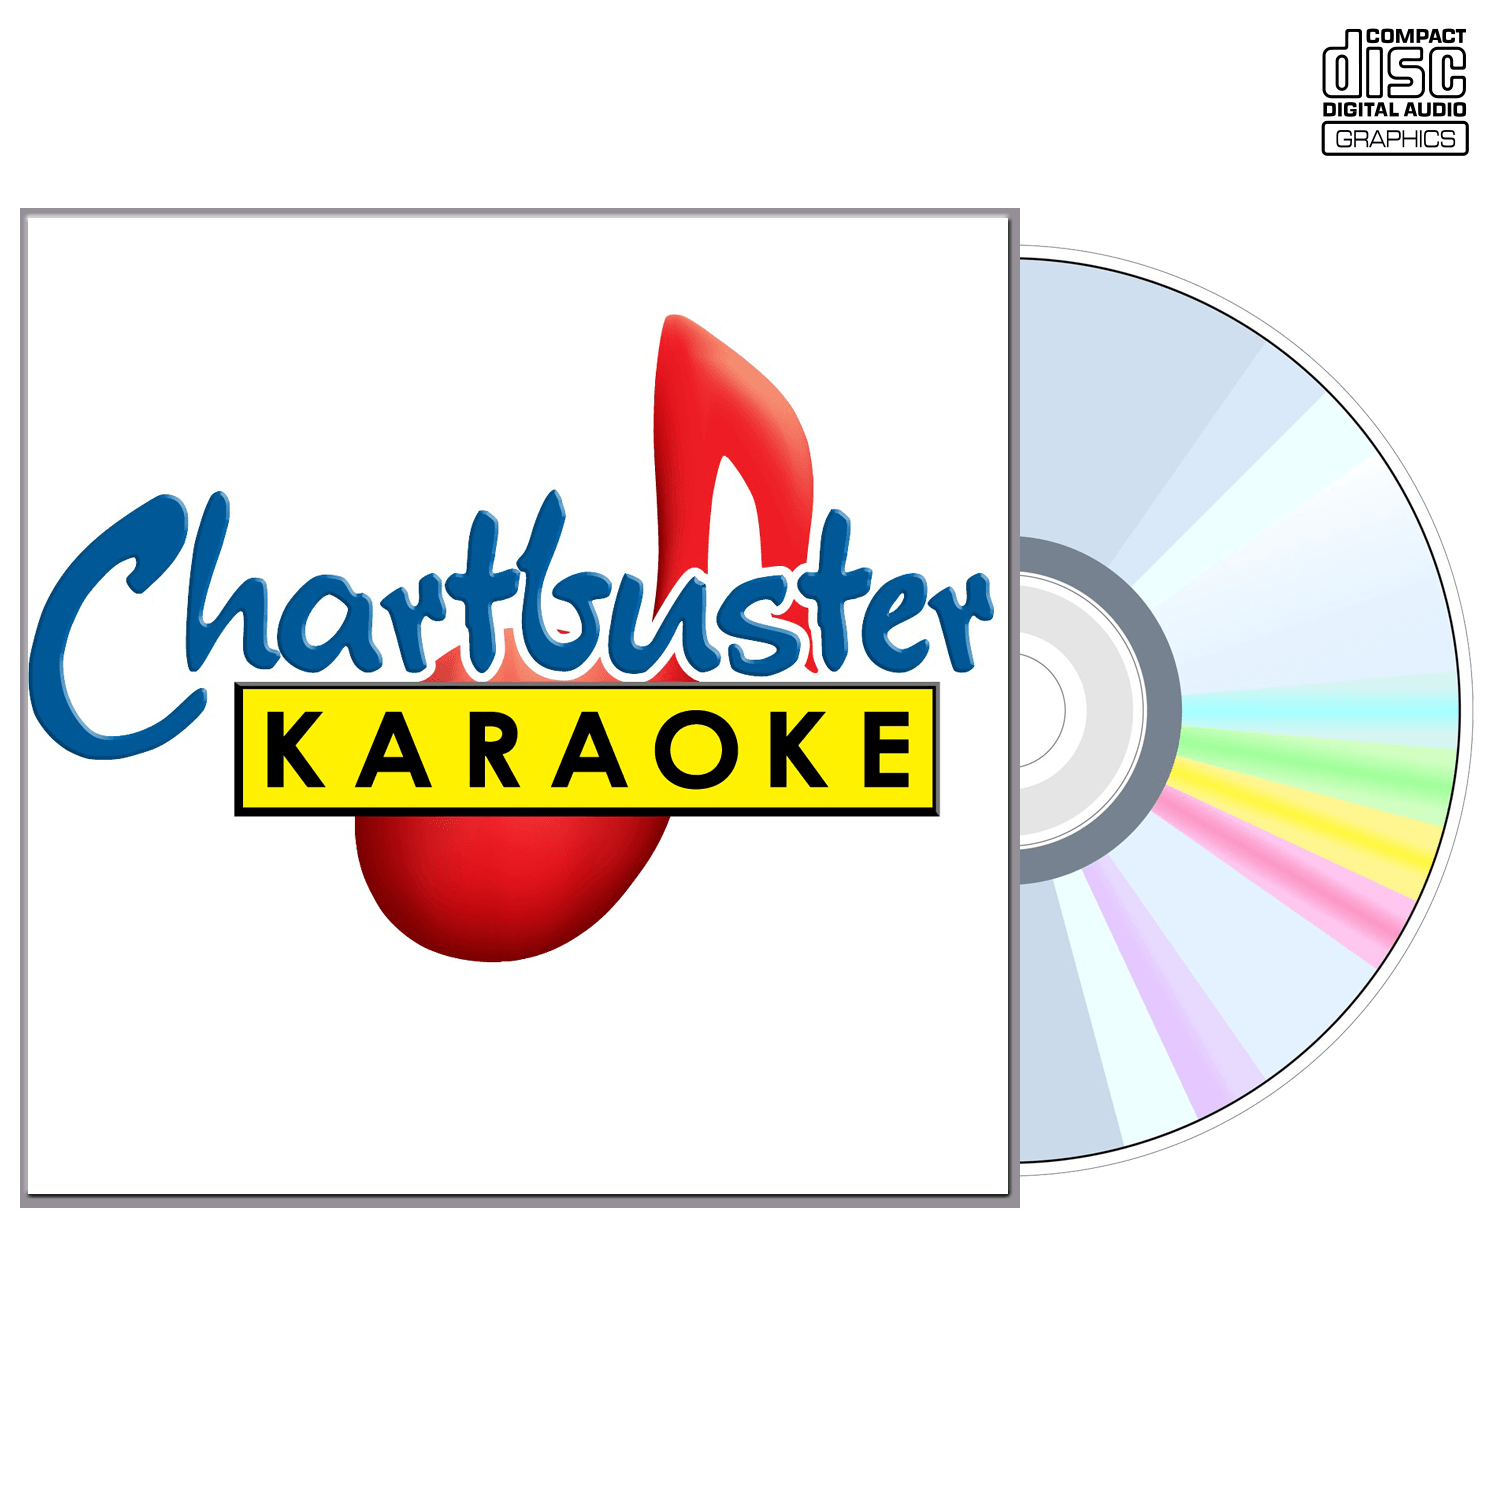 Paul Simon And Garfunkel - CD+G - Chartbuster Karaoke - Karaoke Home Entertainment